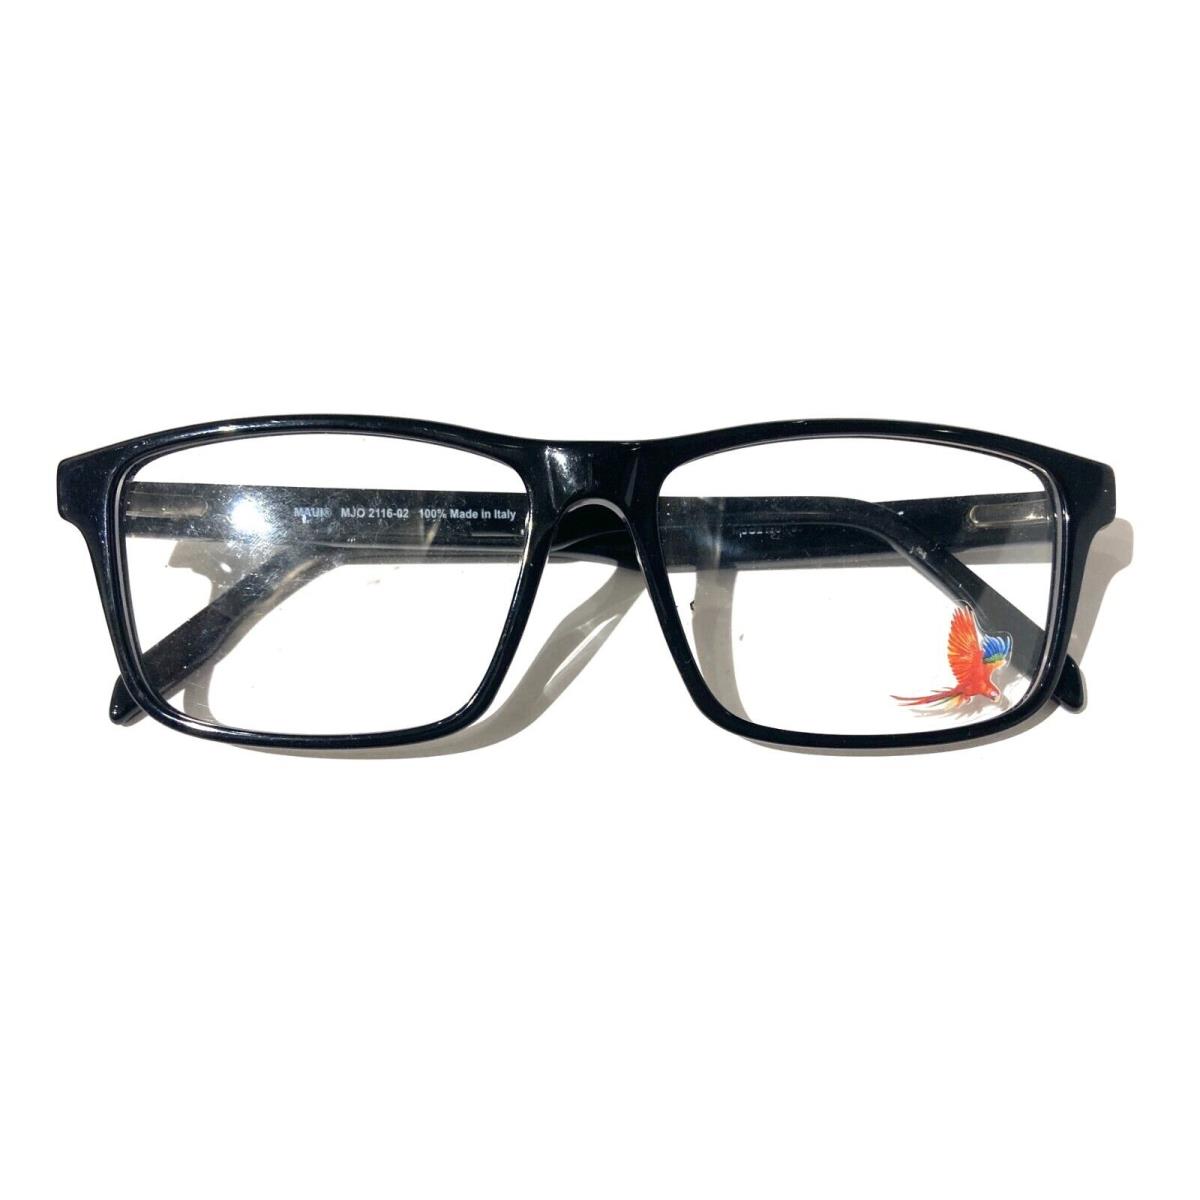 Maui Jim eyeglasses  - Clear , Black Frame 3